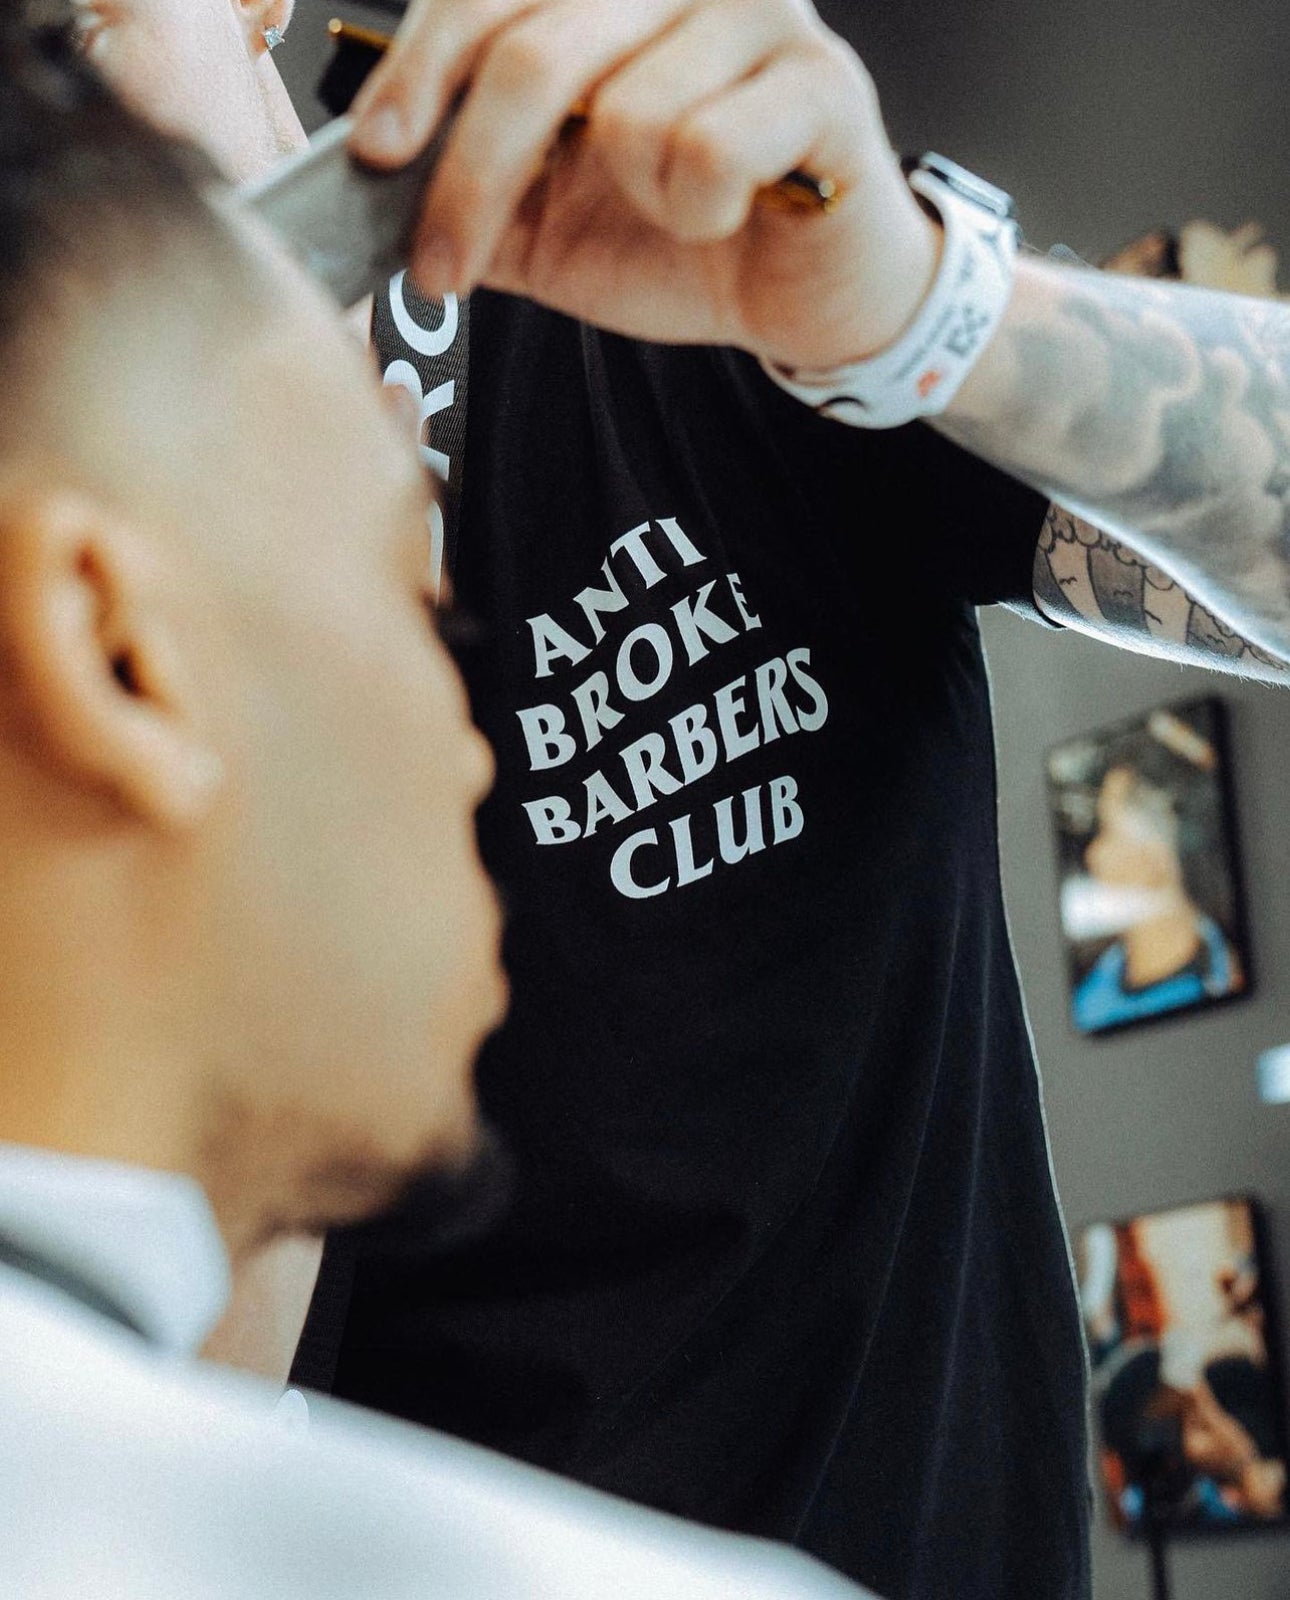 Anti Broke Barbers Classic Tee - Black